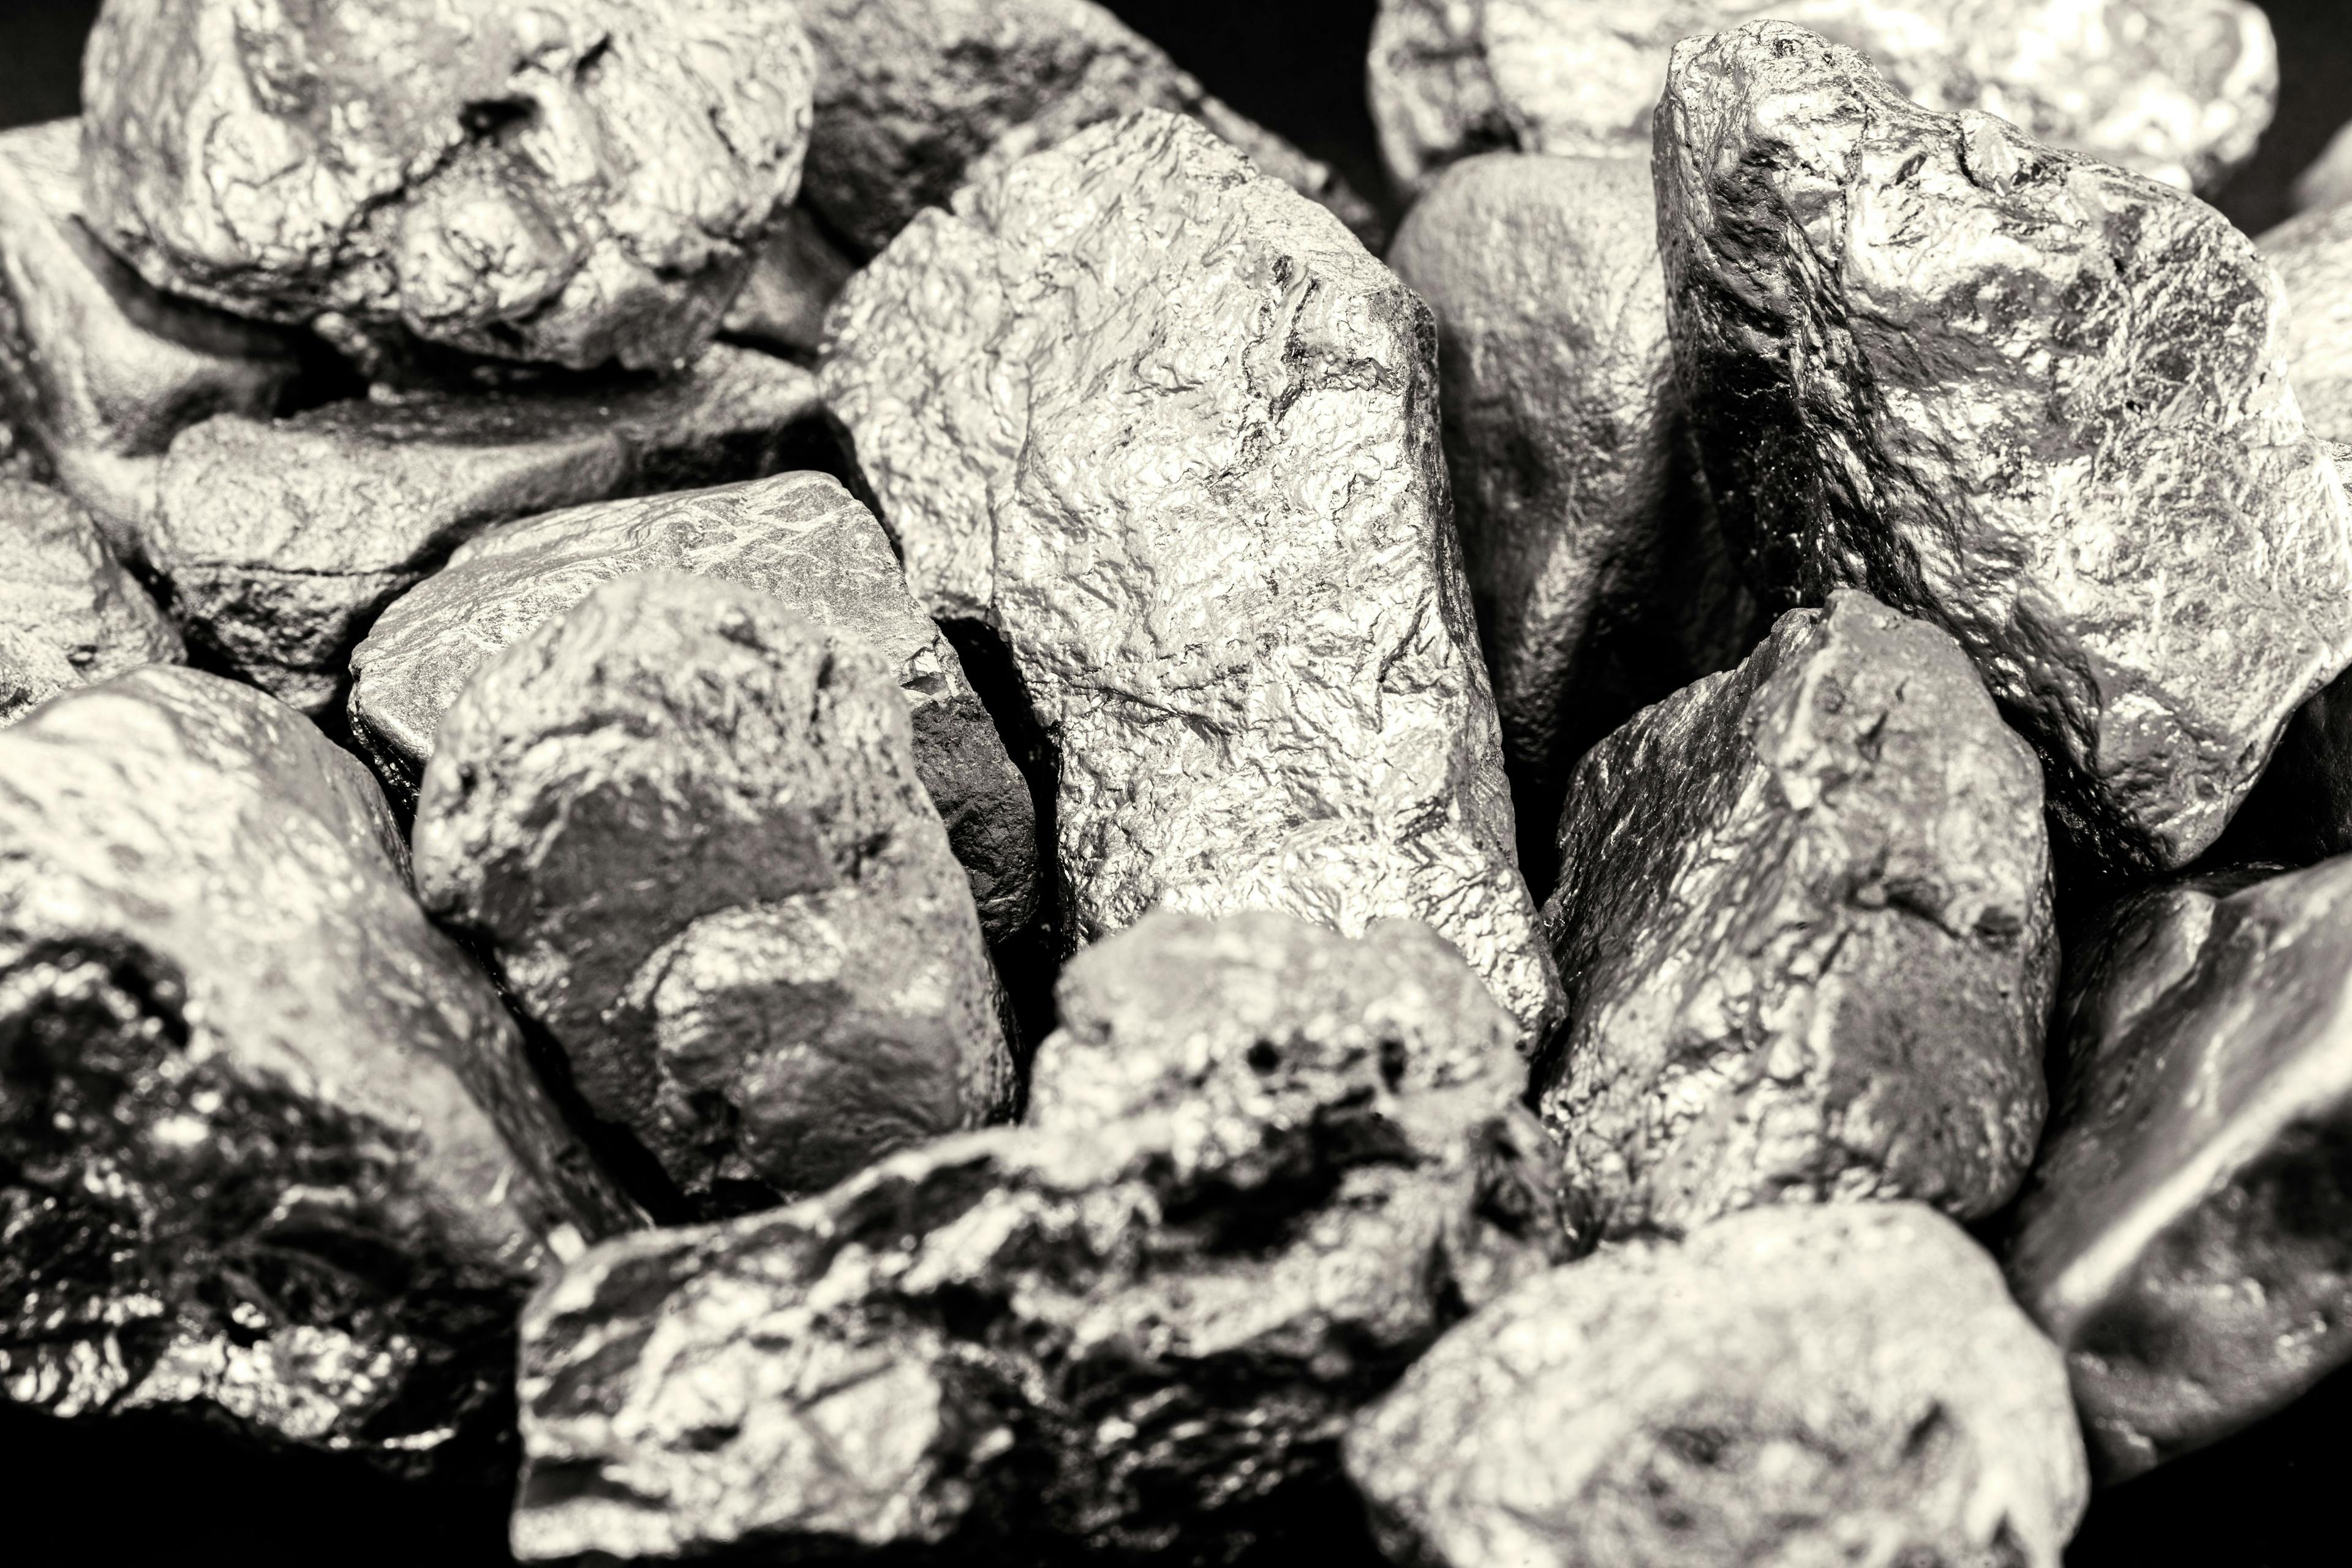 pure tin ore, mined in south america. | Image Credit: © RHJ - stock.adobe.com.